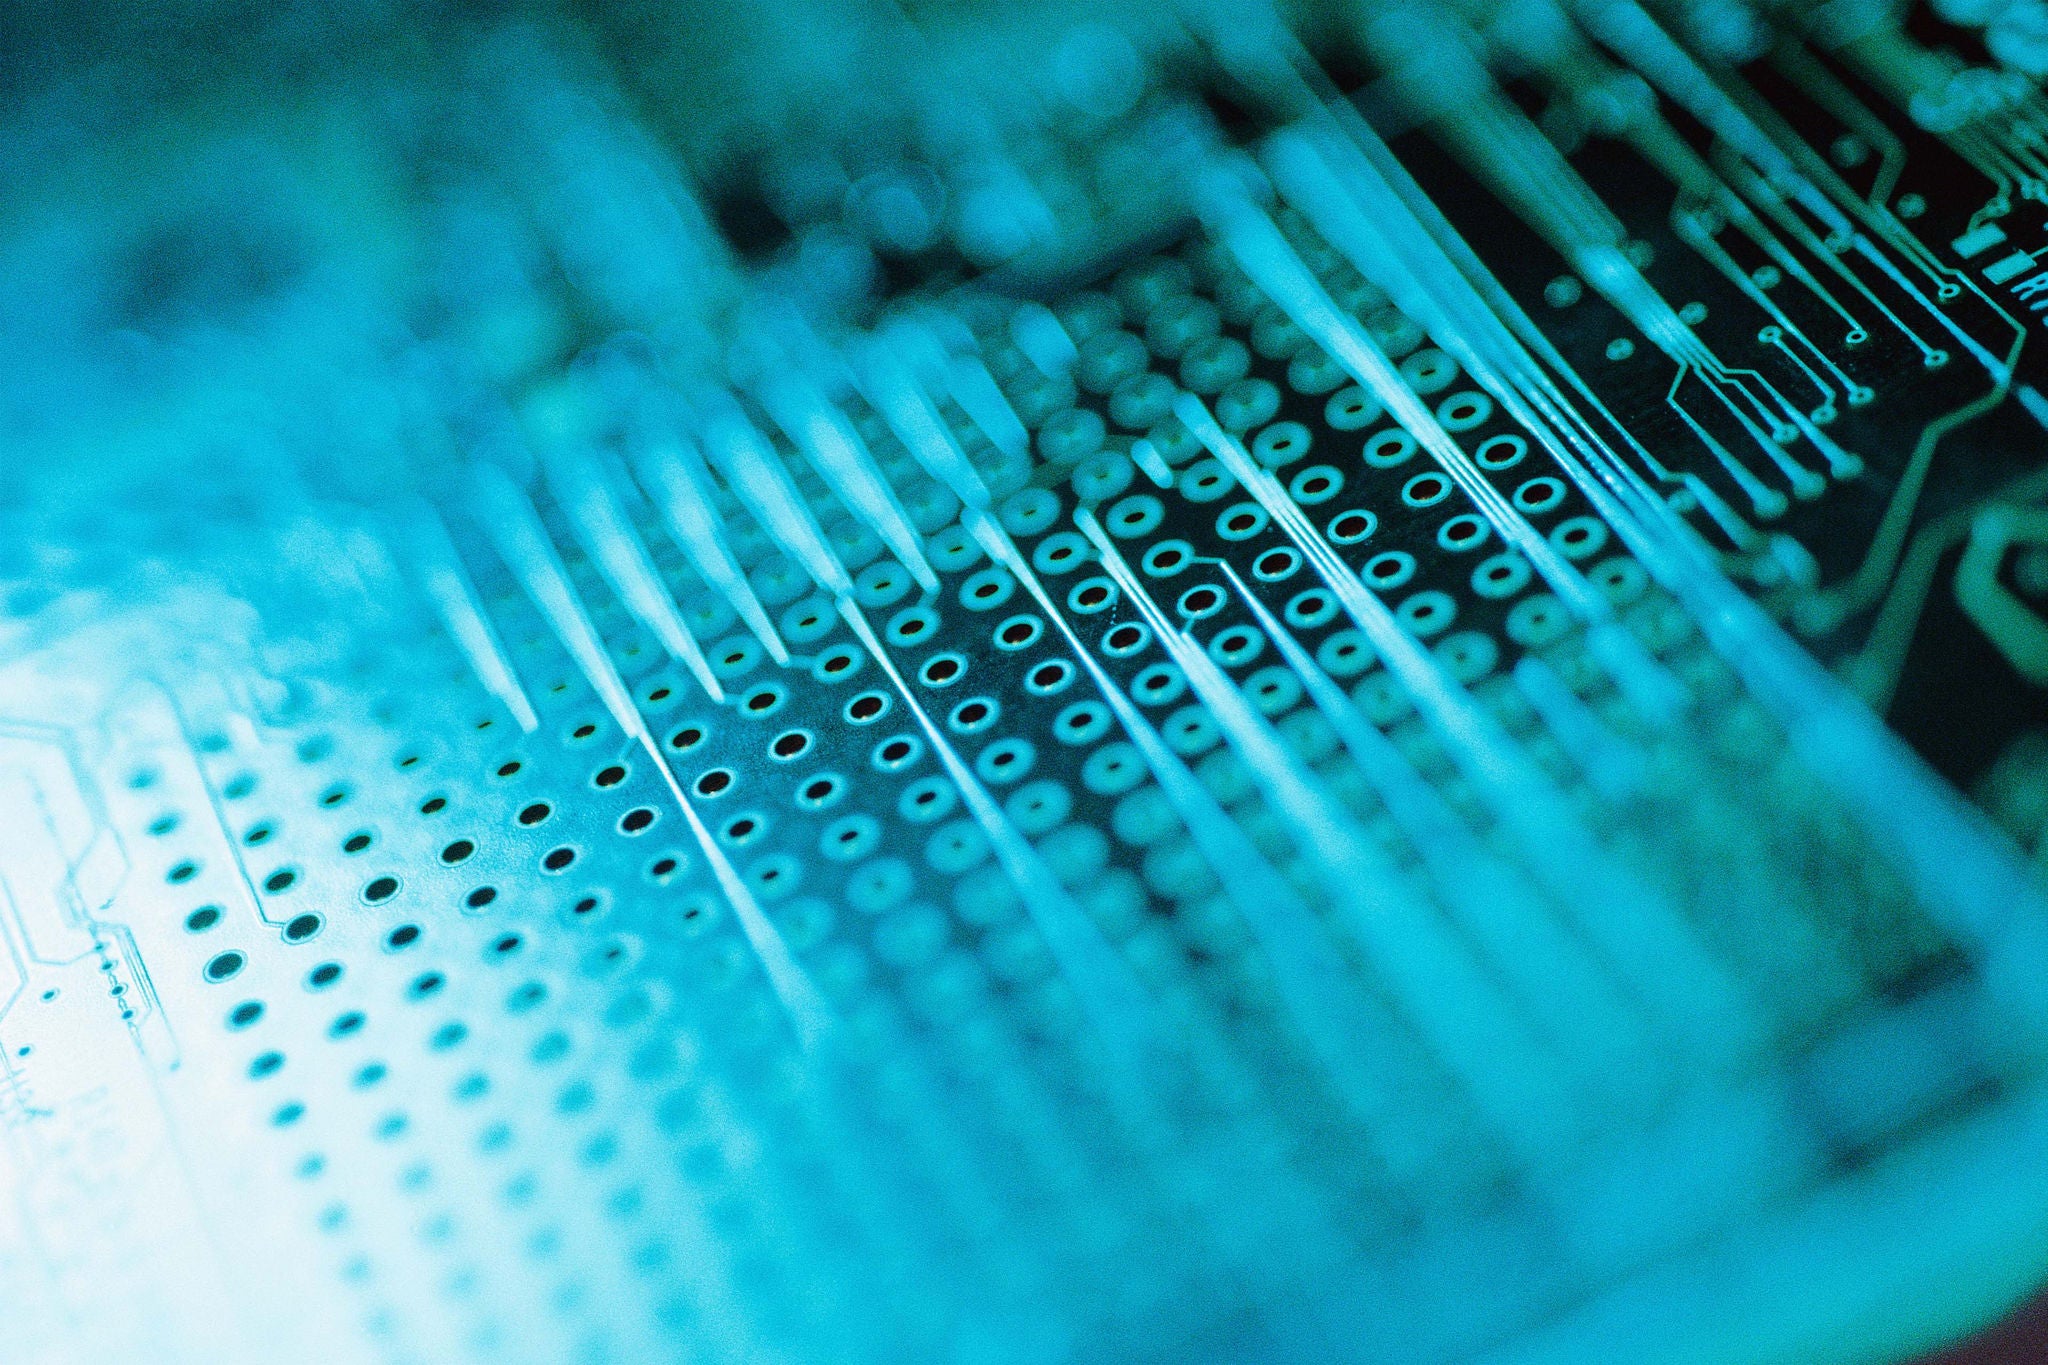 Close up of printed circuit board